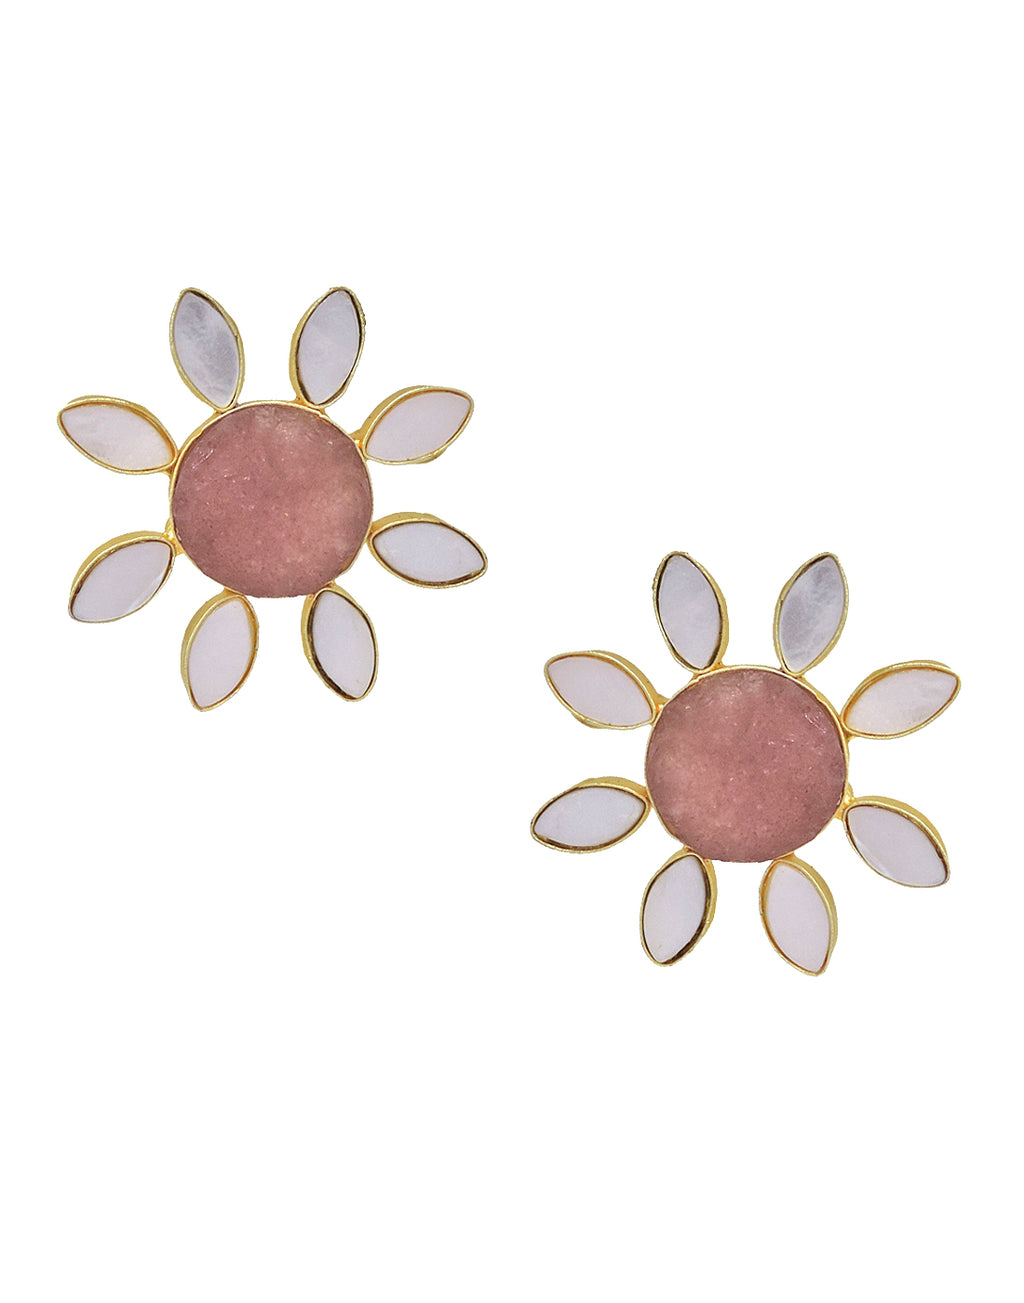 Lisa Flower Earrings (Quartz)- Statement Earrings - Gold-Plated & Hypoallergenic - Made in India - Dubai Jewellery - Dori